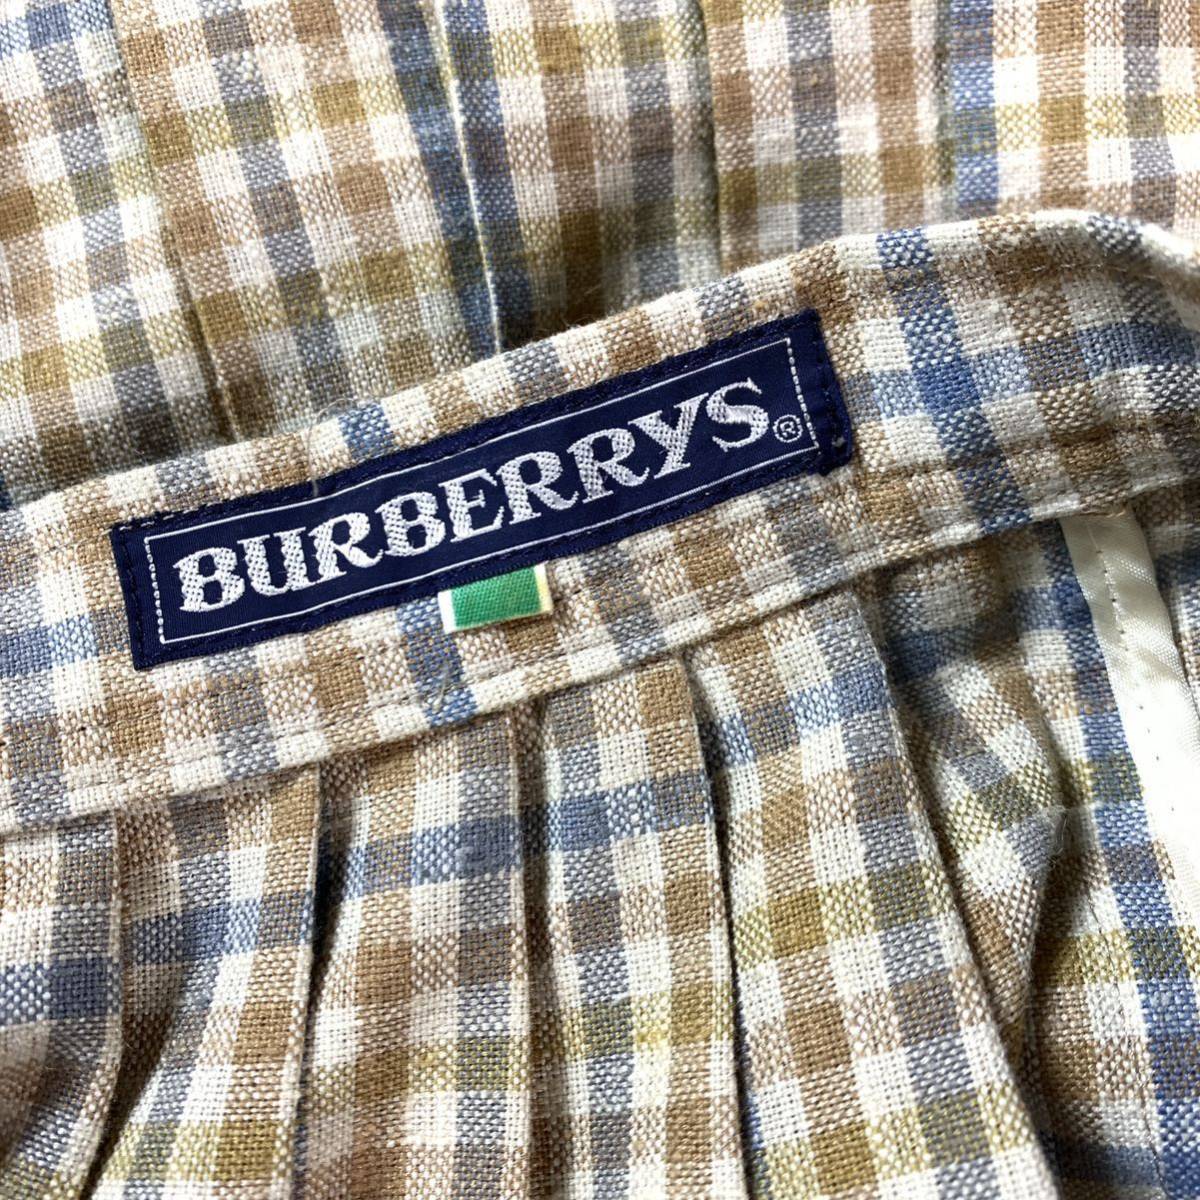  Burberry юбка в складку длинная юбка проверка flair linenYA5430